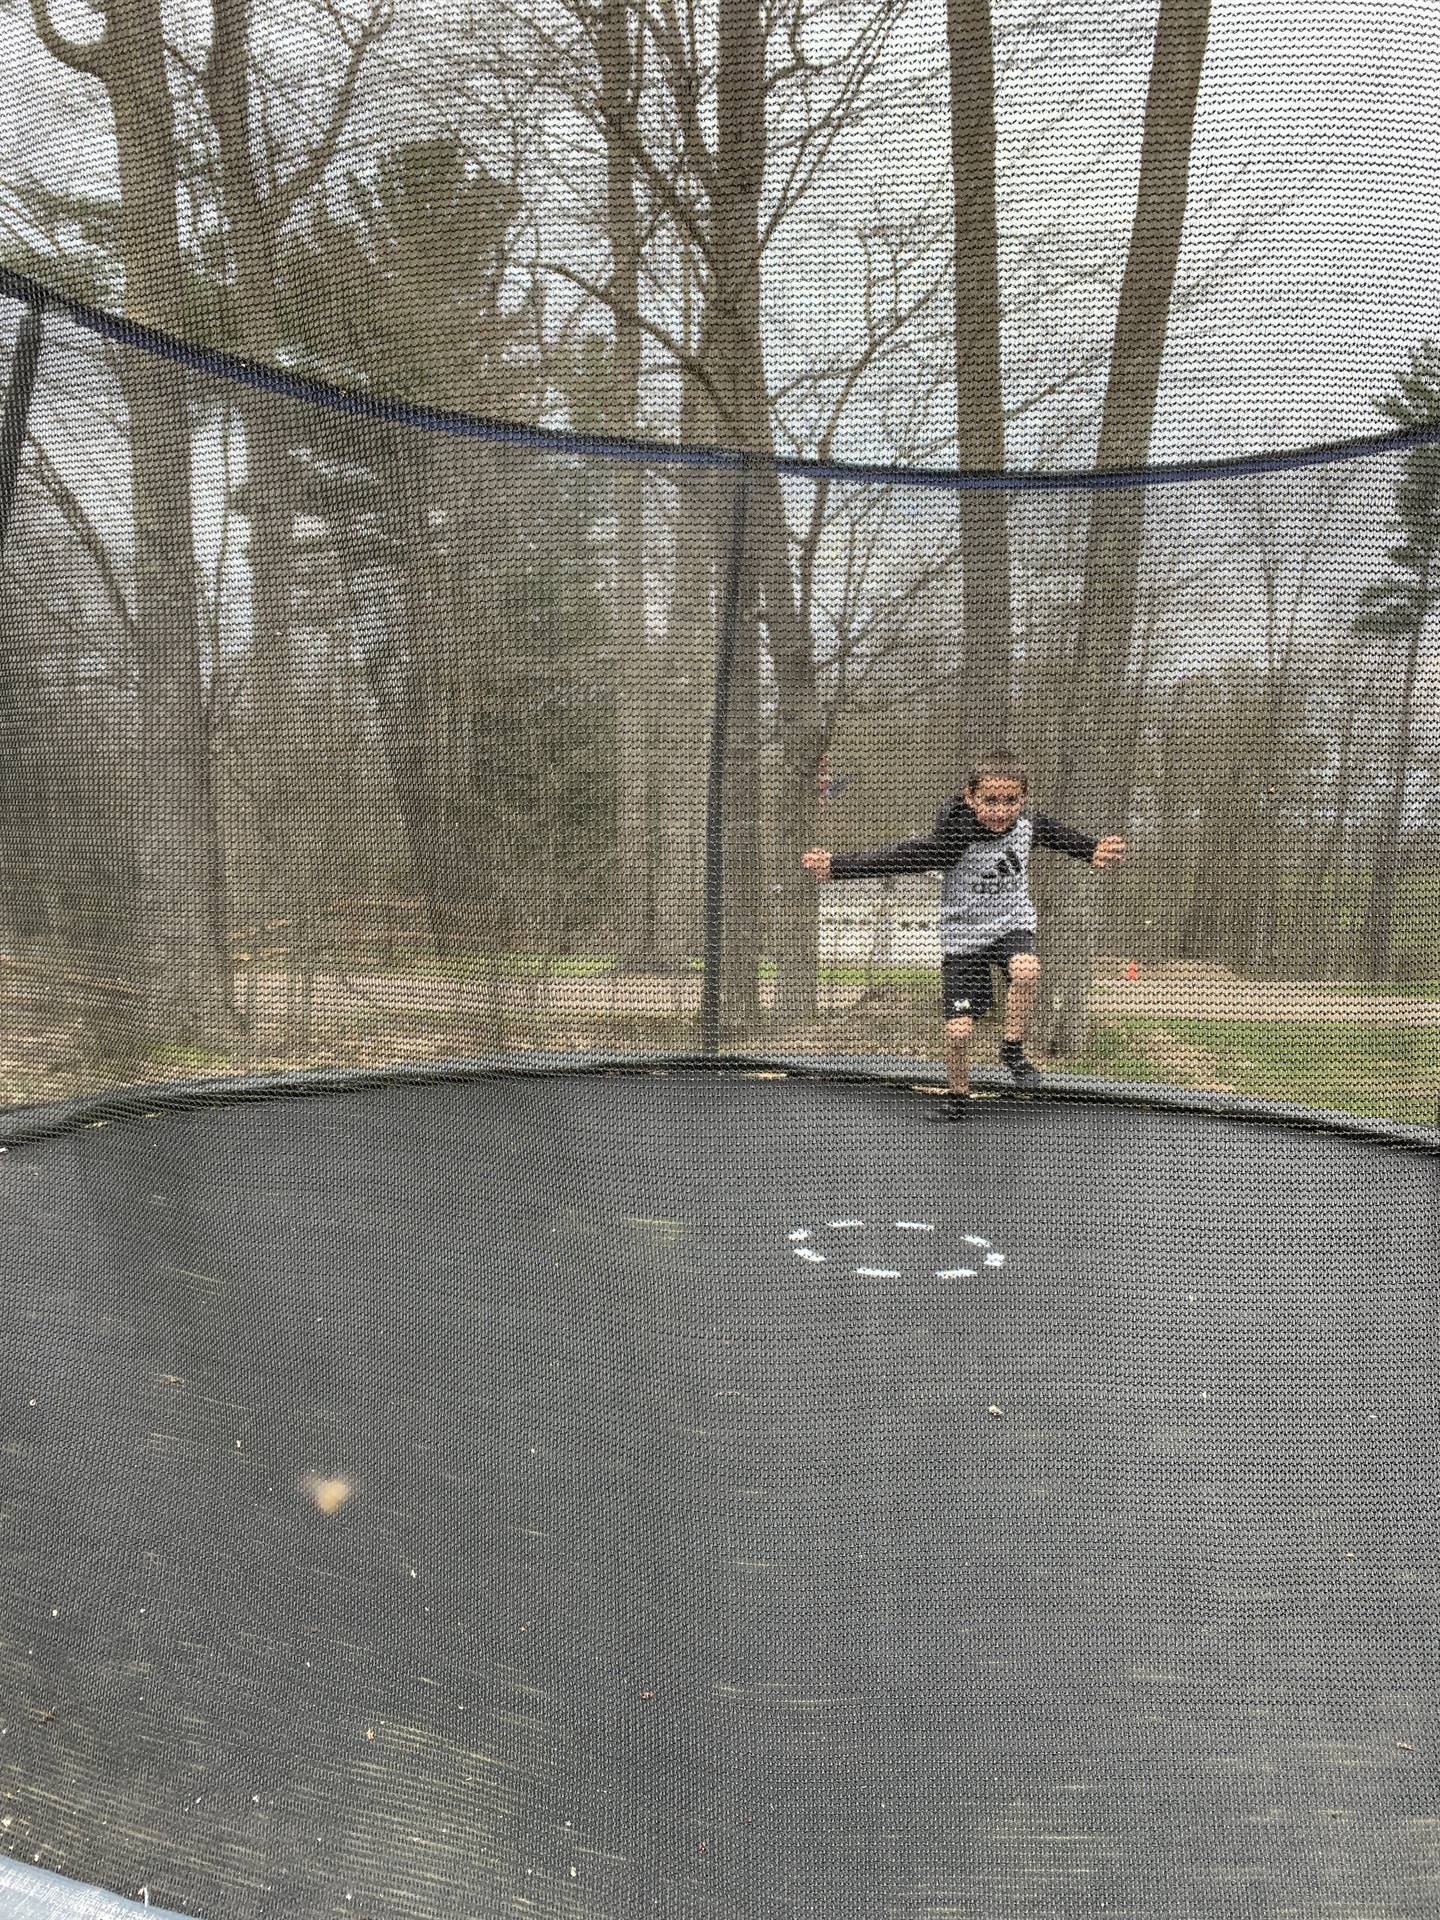 student on trampoline